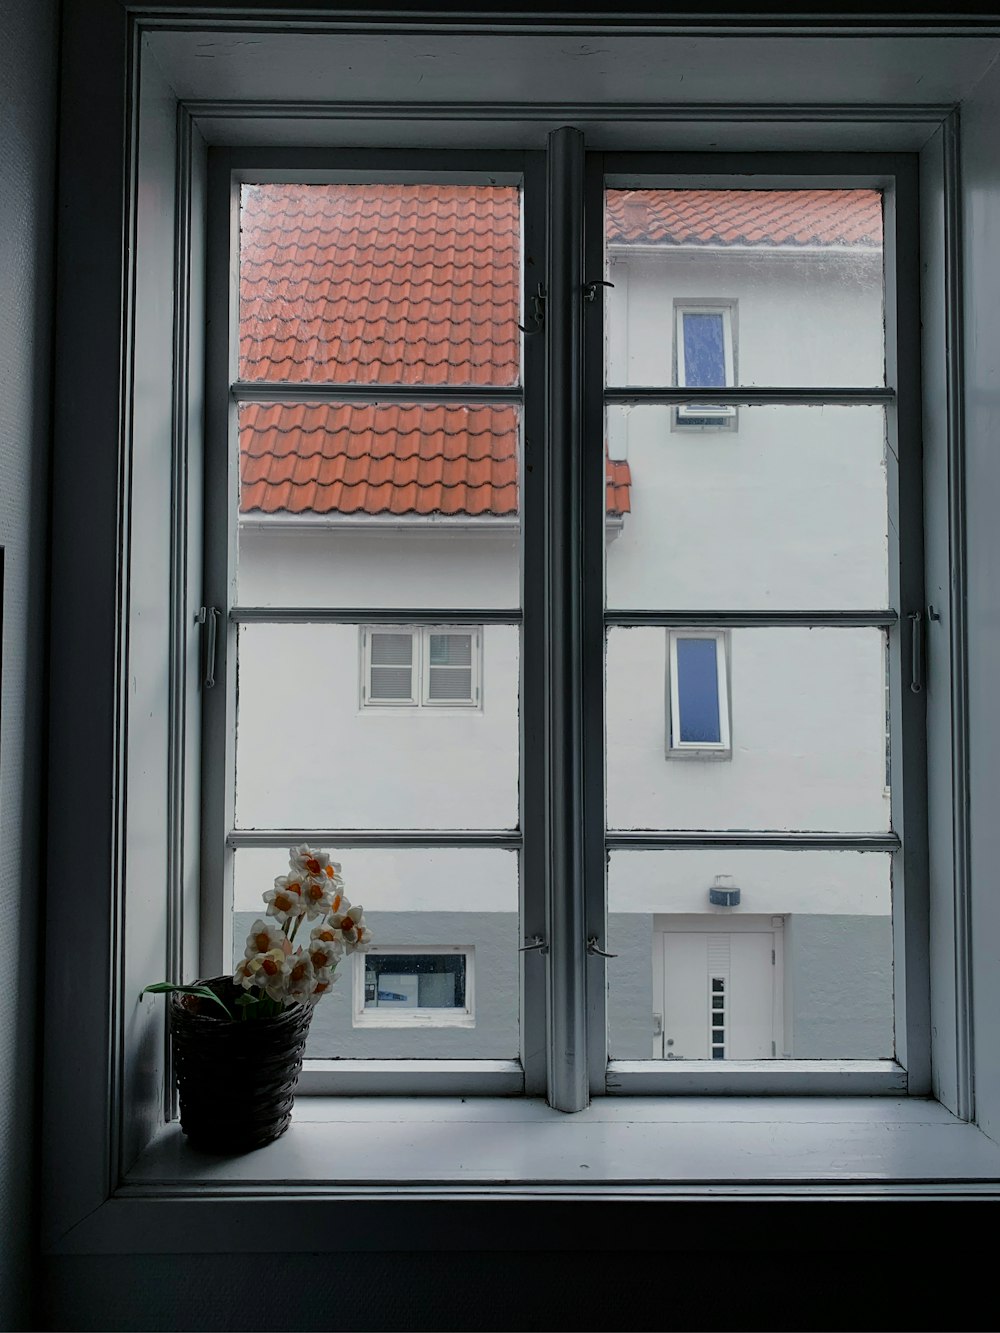 white wooden framed glass window photo – Free Home decor Image on Unsplash